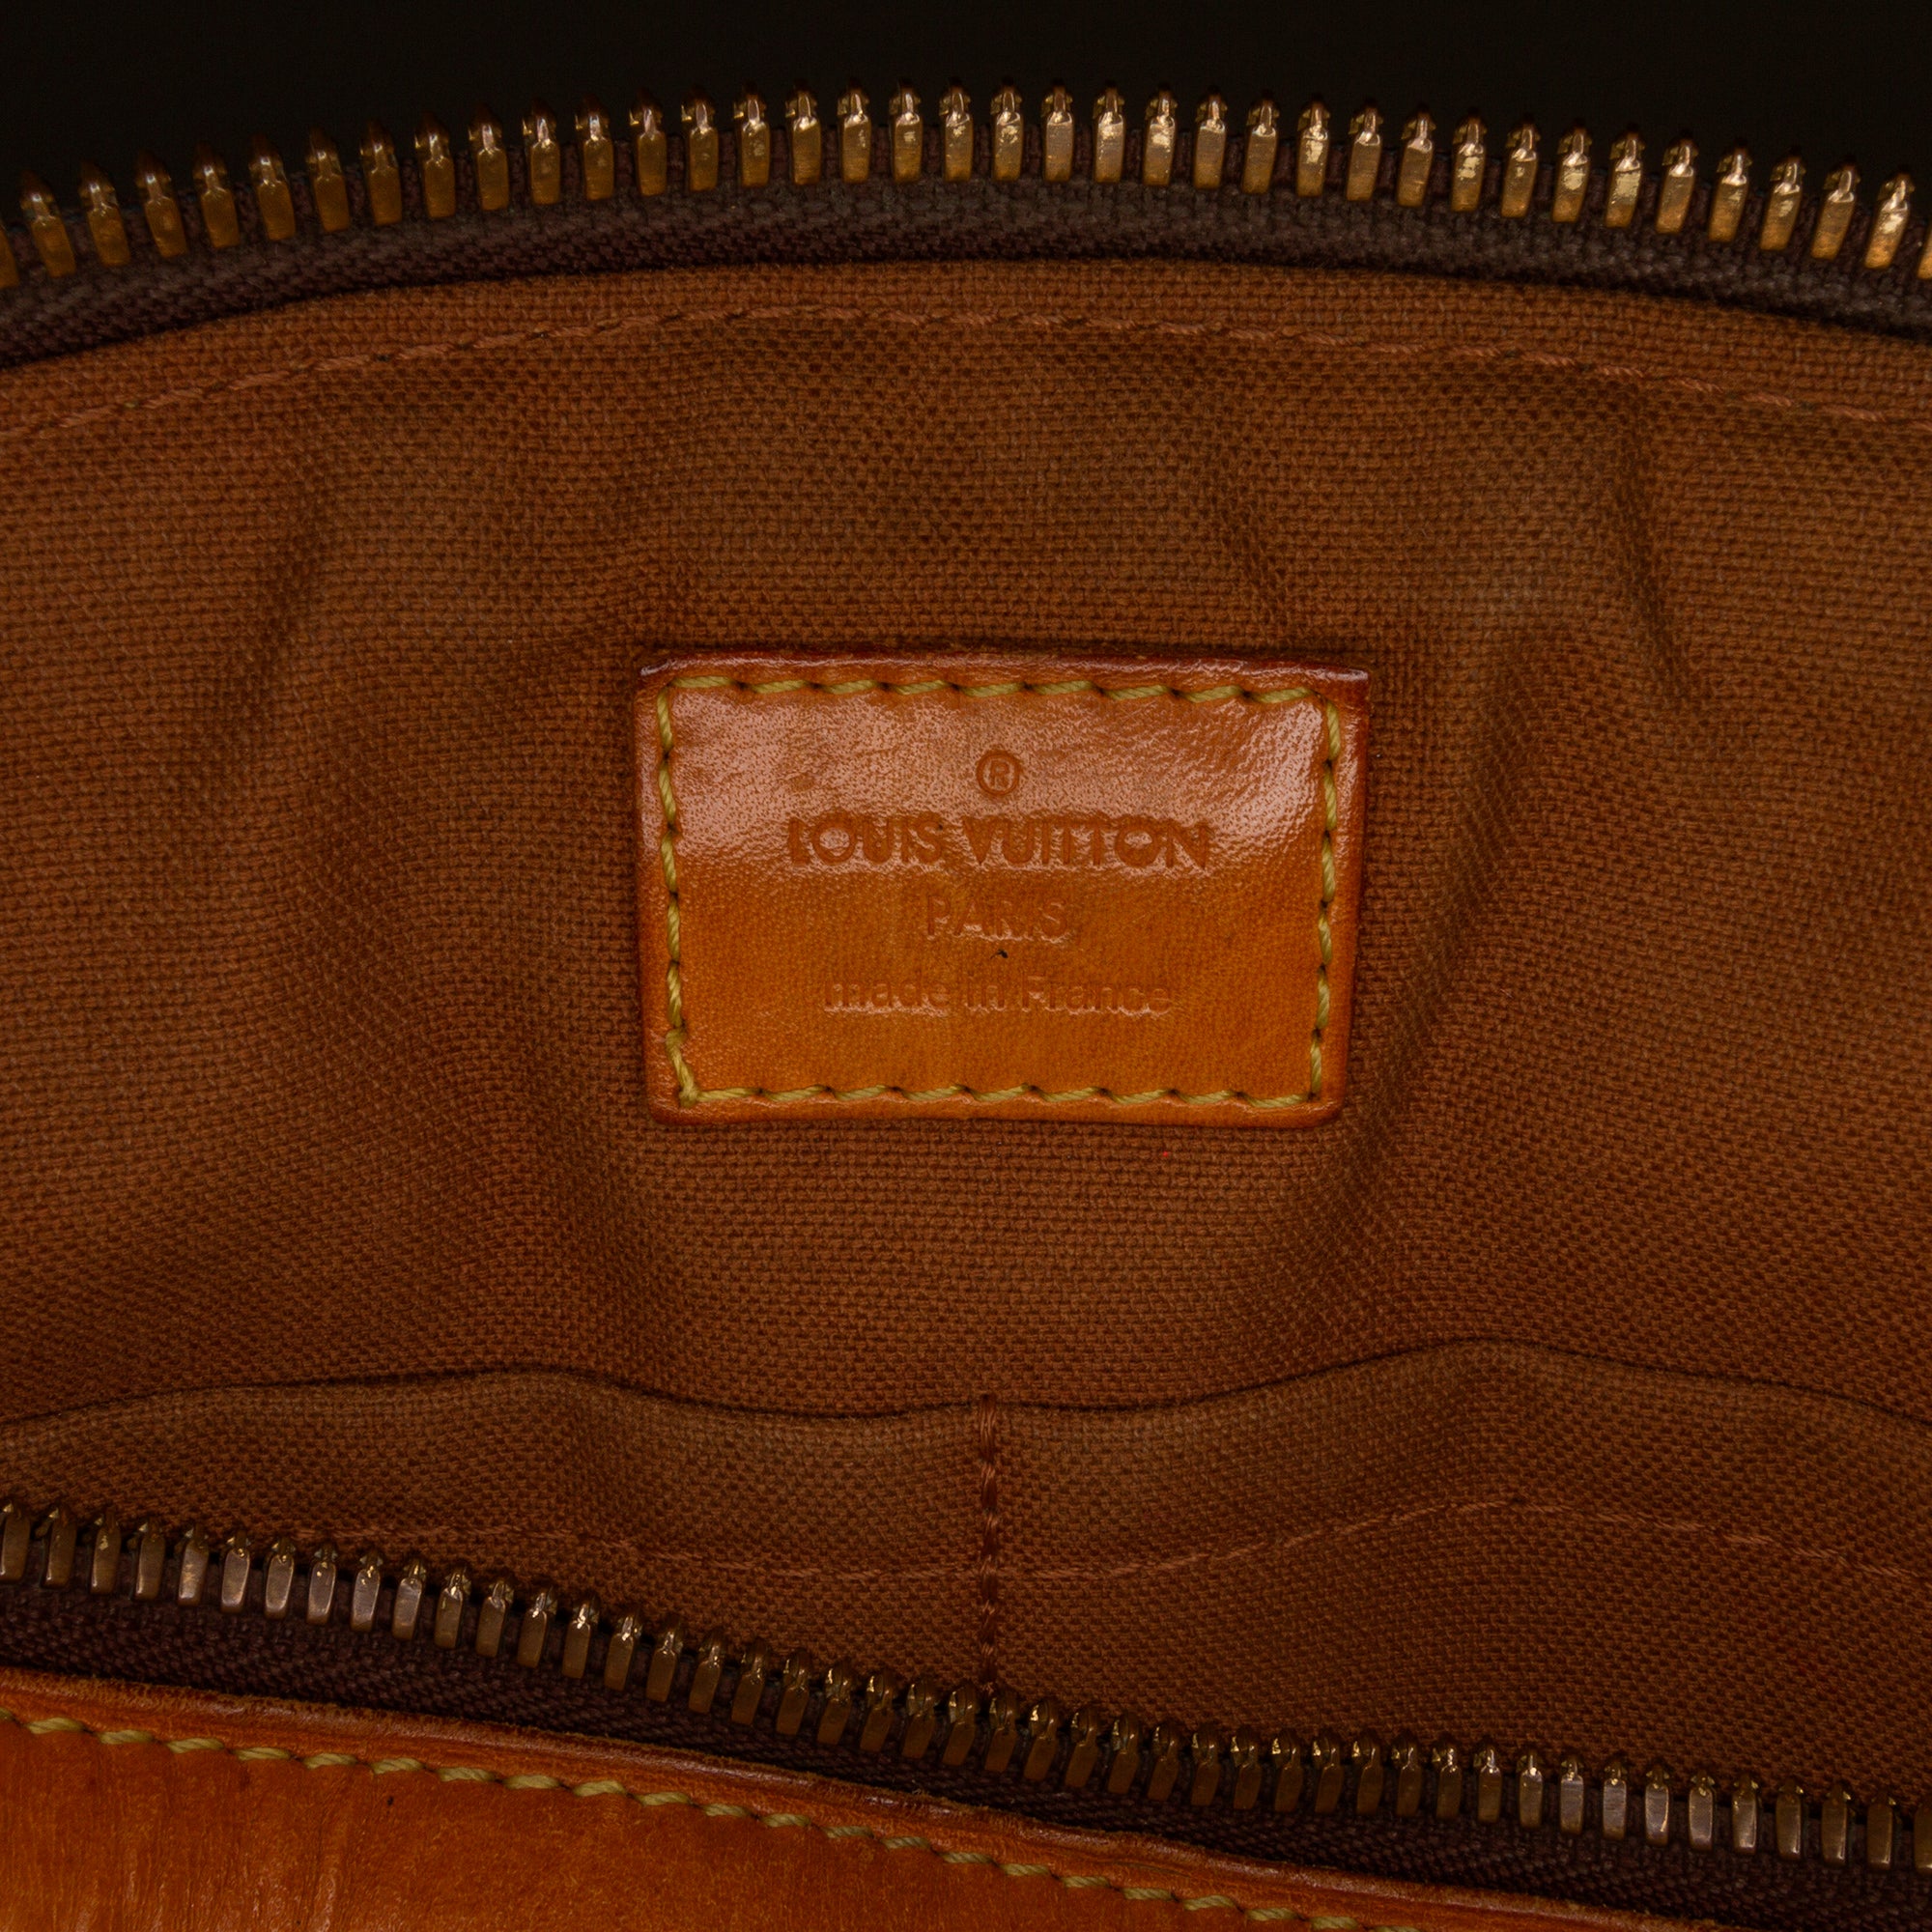 Brown Louis Vuitton Monogram Tivoli PM Handbag – Designer Revival